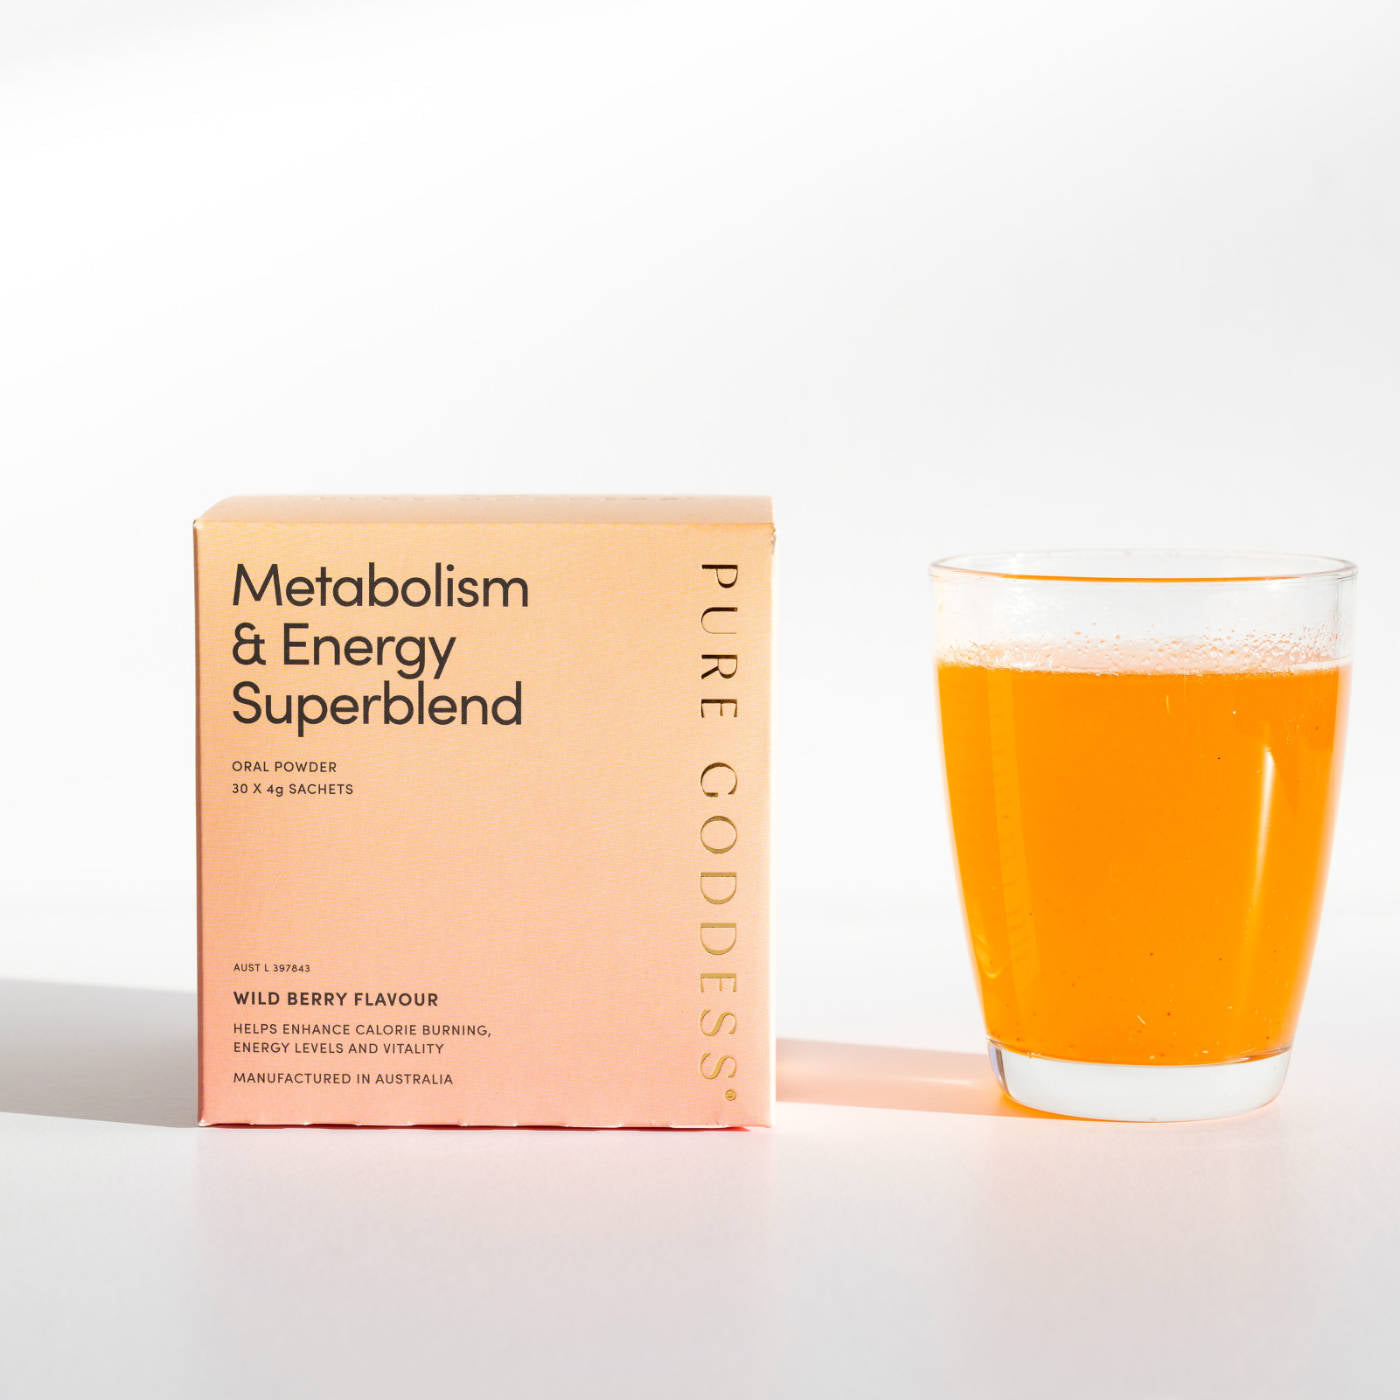 Metabolism & Energy Superblend